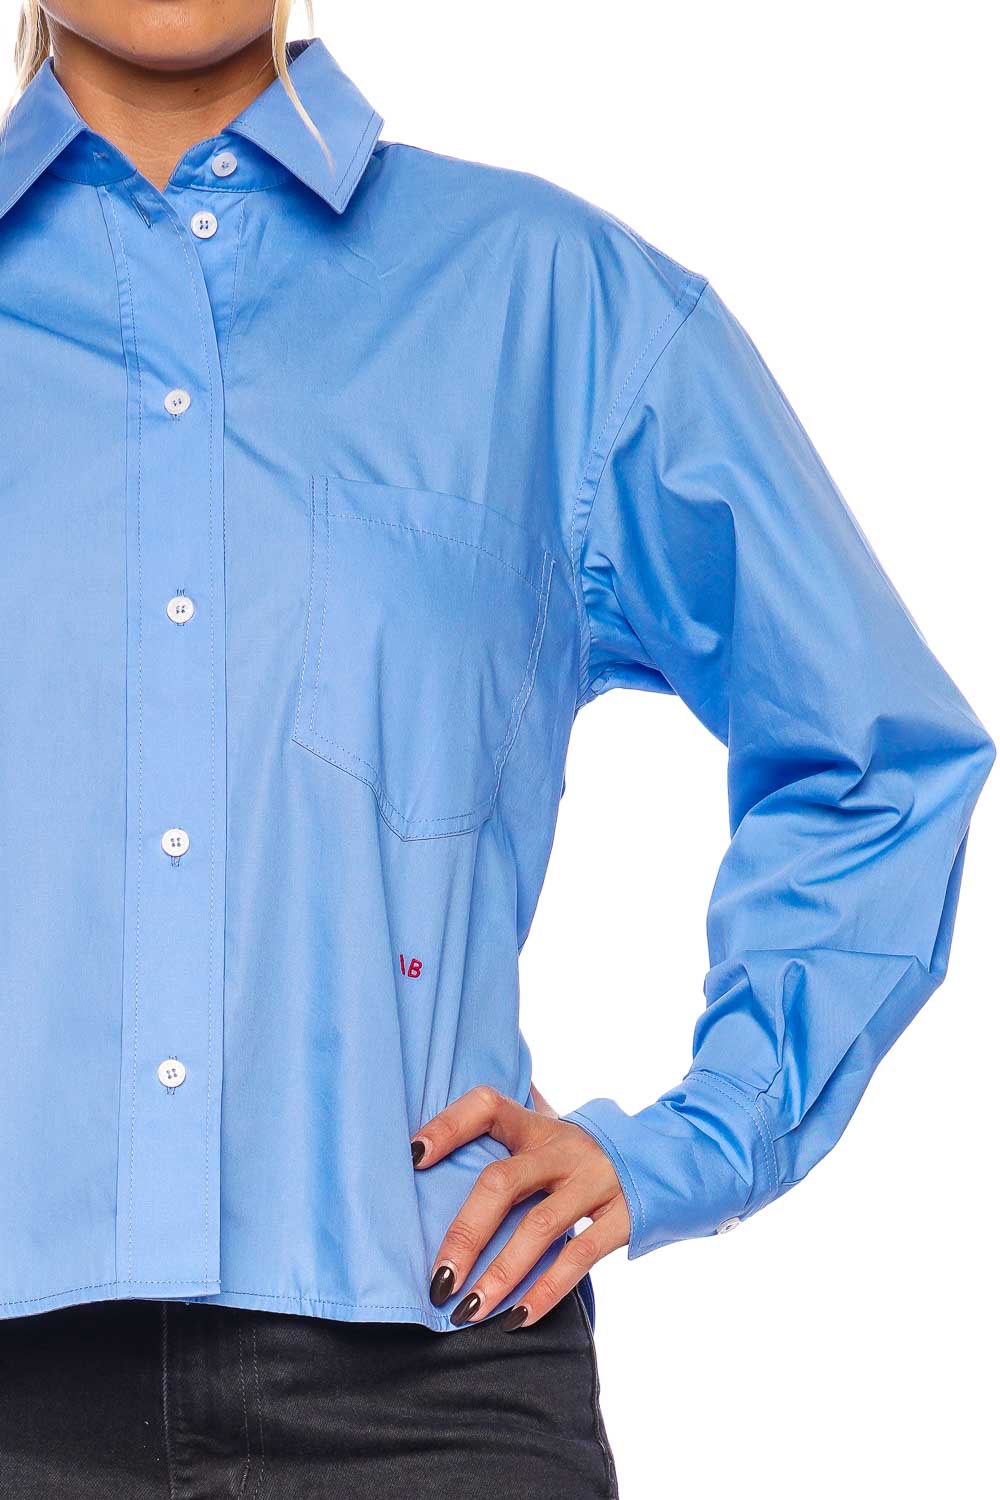 Victoria Beckham Cropped Long Sleeve Shirt 1124WSH005238A OXFORD BLUE